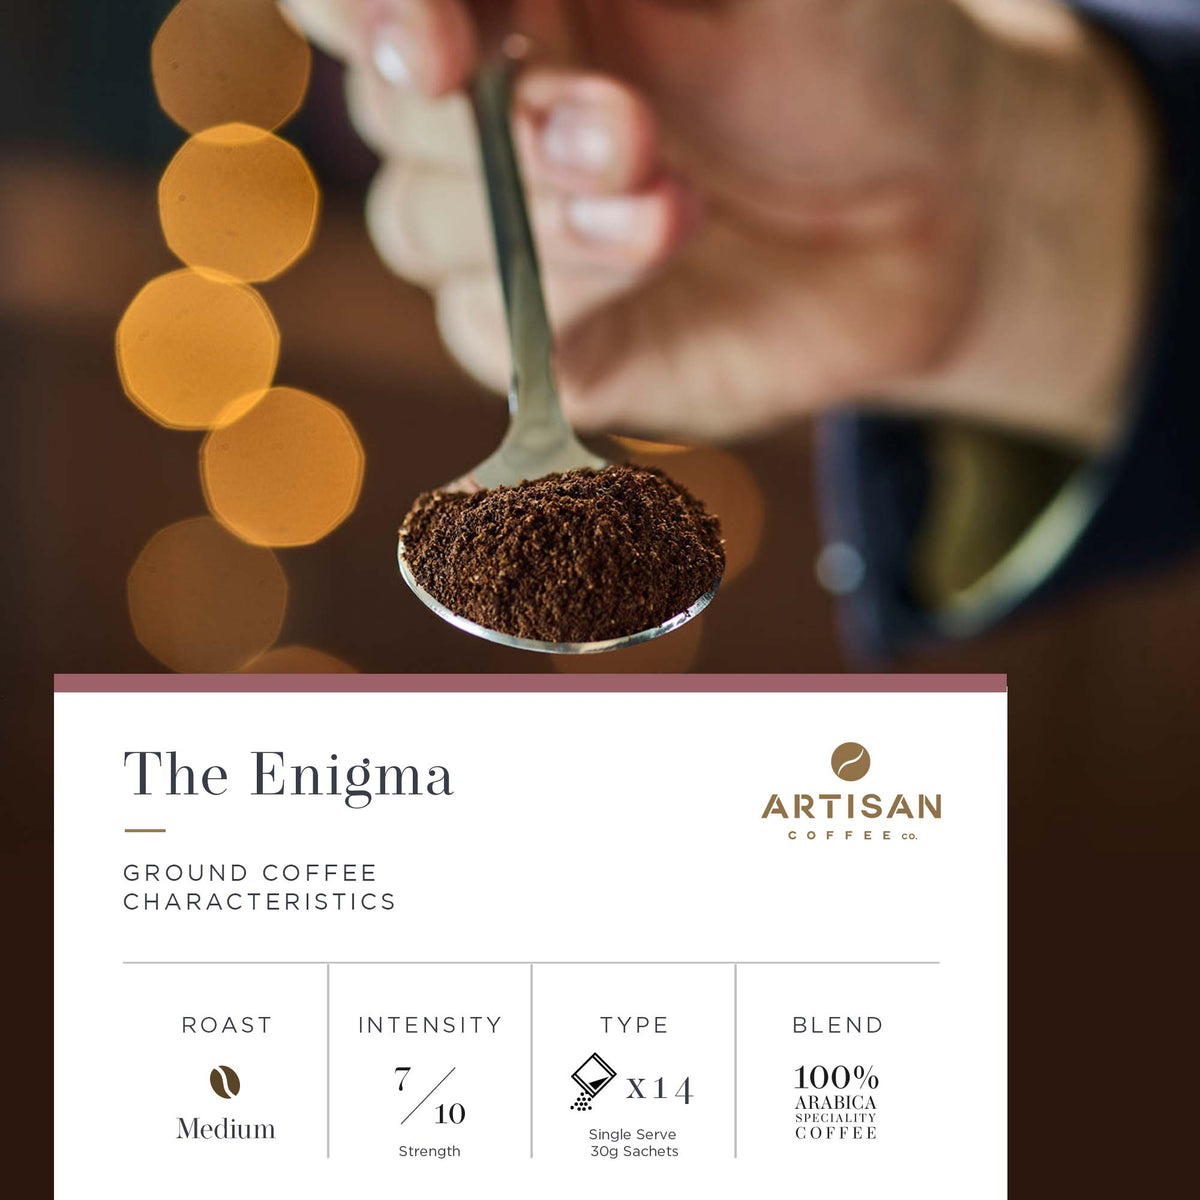 Artisan Coffee Co The Enigma ground coffee Infographic characteristics